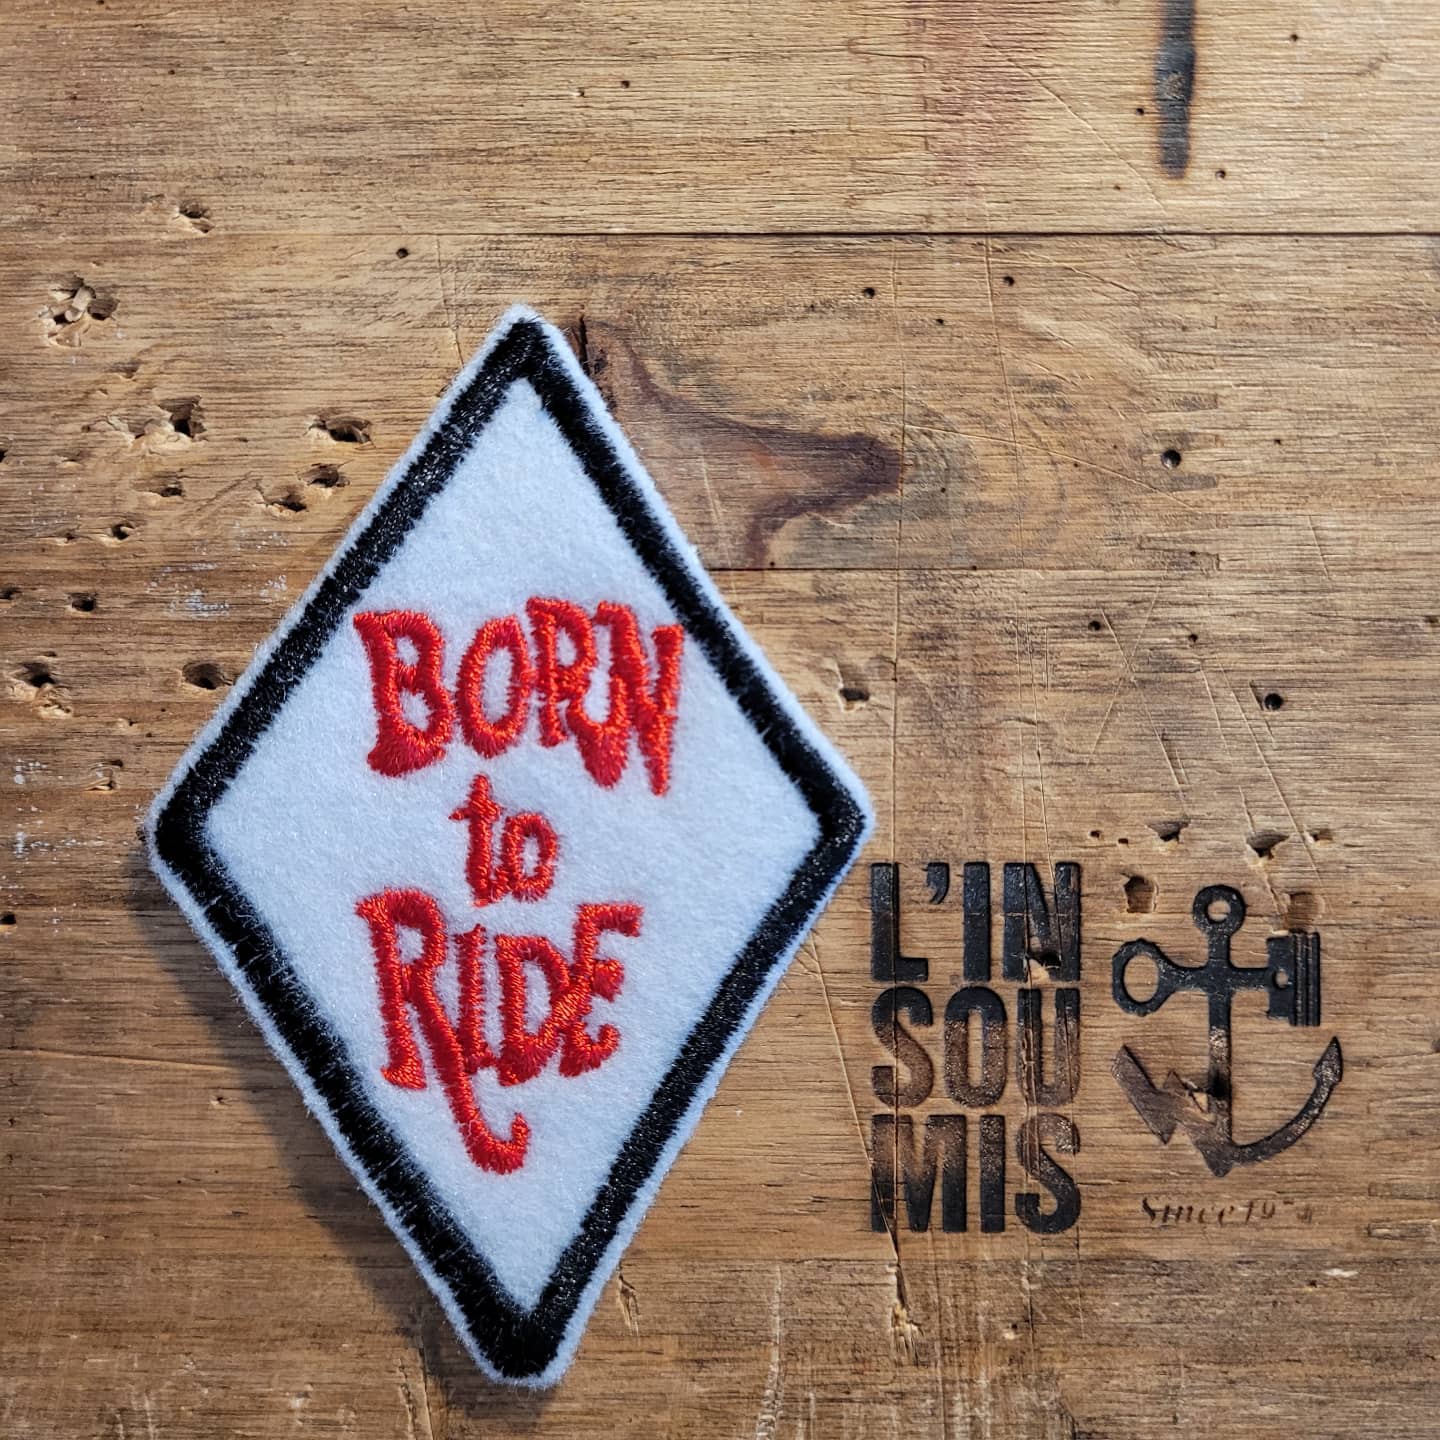 Born to Ride